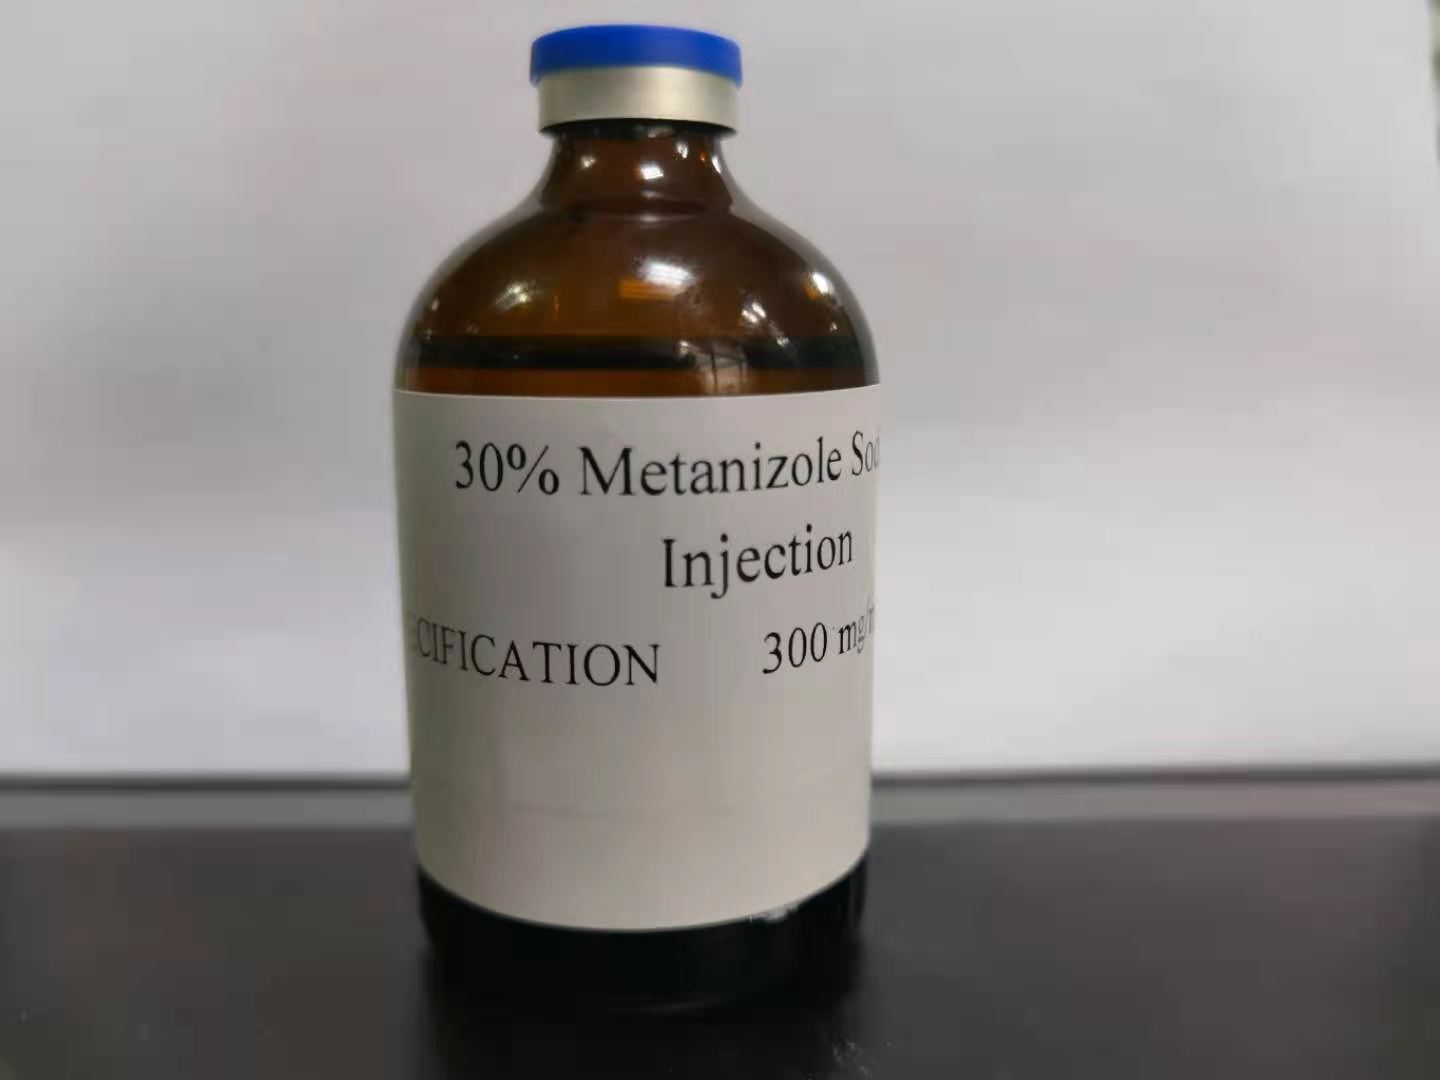 30% Metanizole Sodium Injection